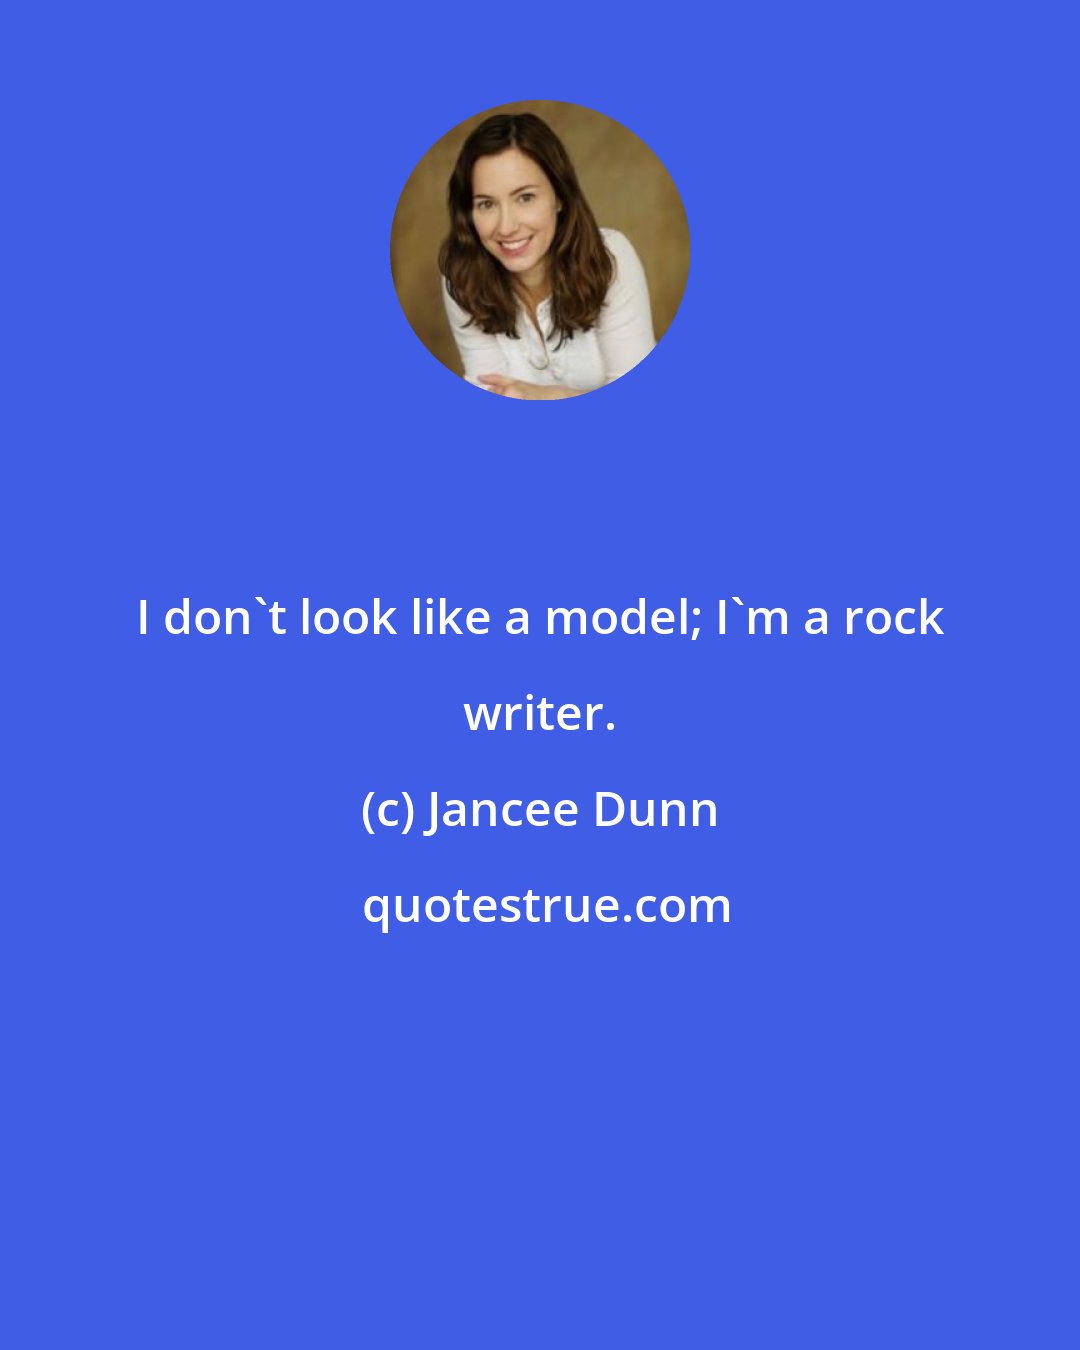 Jancee Dunn: I don't look like a model; I'm a rock writer.